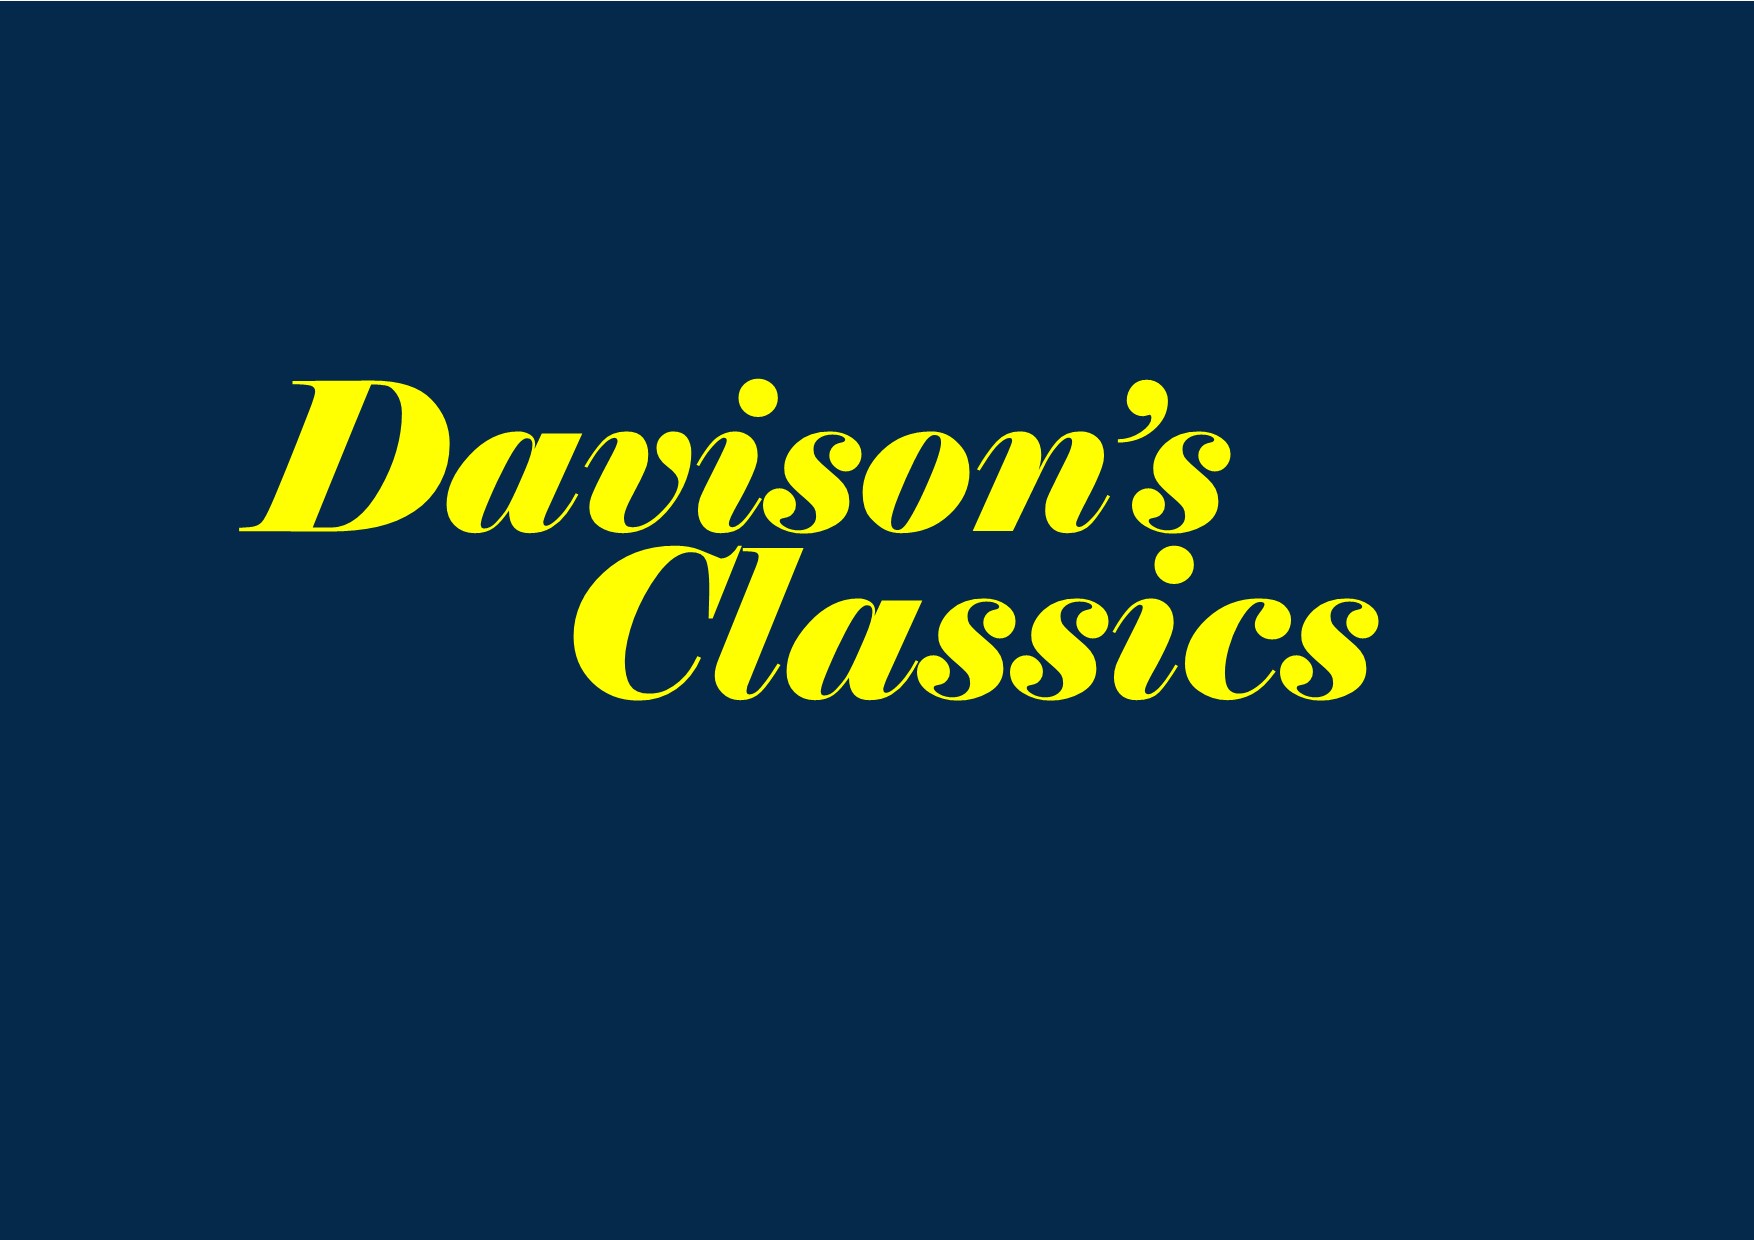 Davisons Classics Evoke Classics Trade Directory